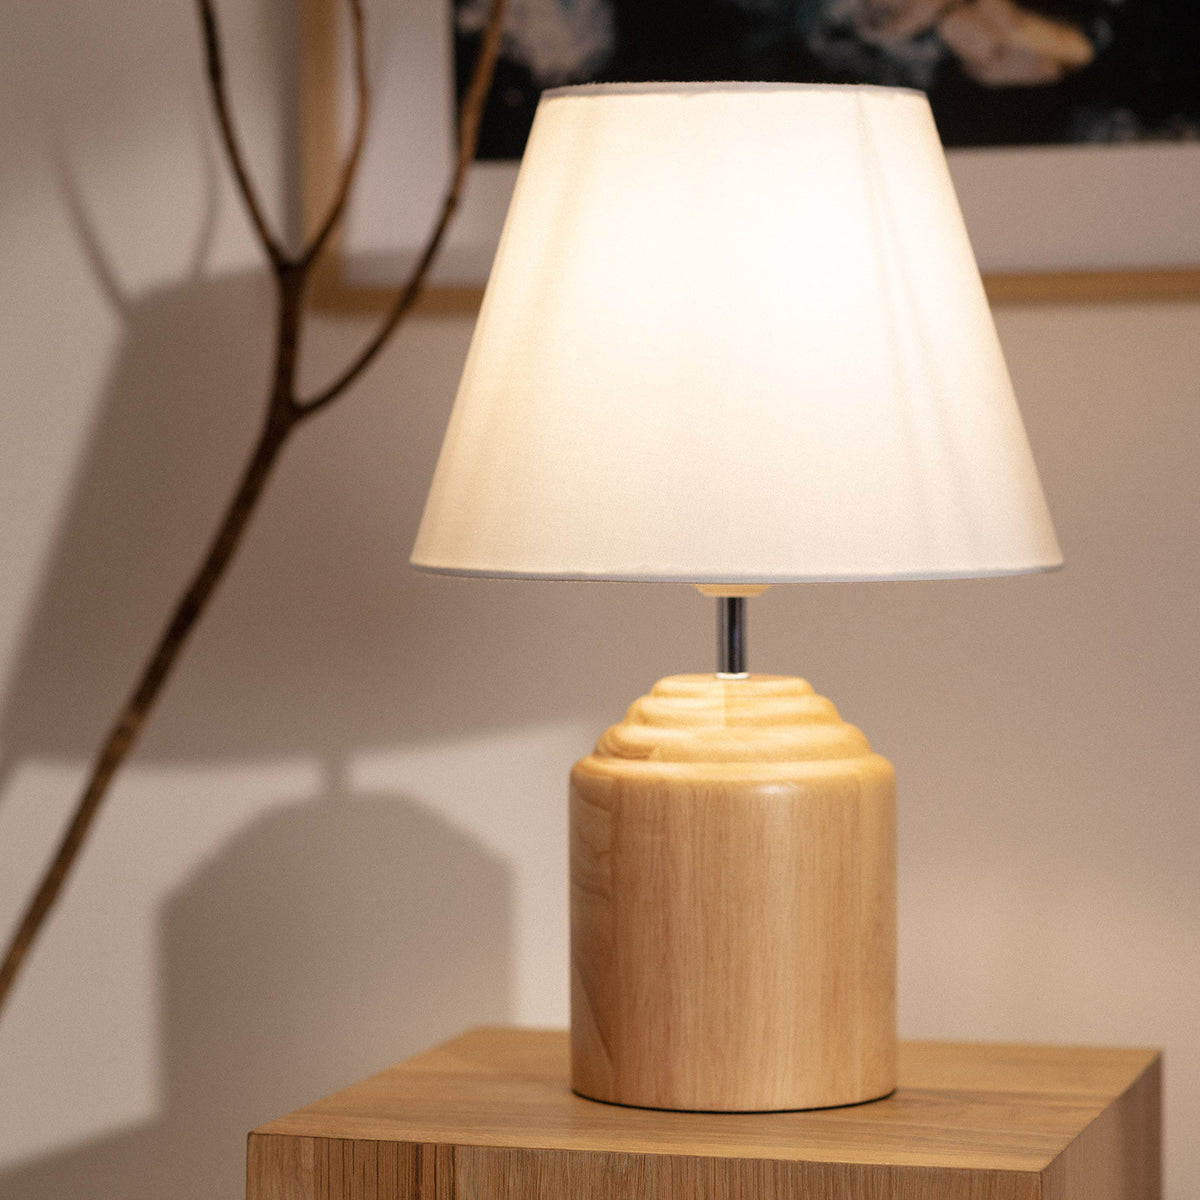 Holz Gusau weißem Living Lampenschirm– Tischlampe mit Aesthetic Skandinavische